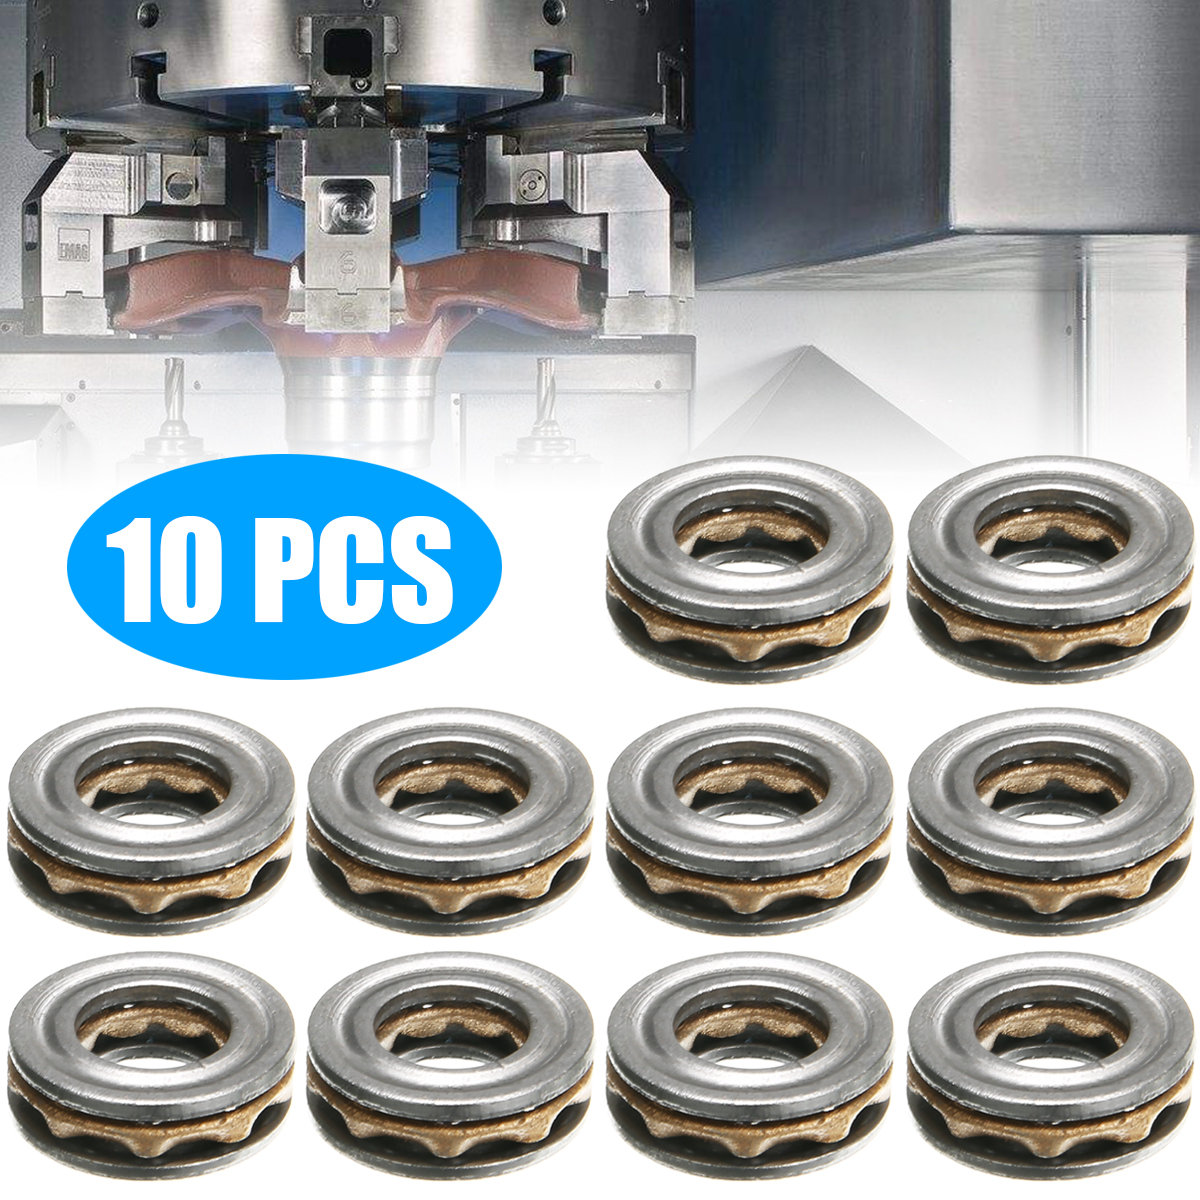 10Pcs High Precision Miniature Thrust Ball Bearings F8-16M Metal Axial Ball Bearing Set 8x16x5mm For Hardware Tool Parts